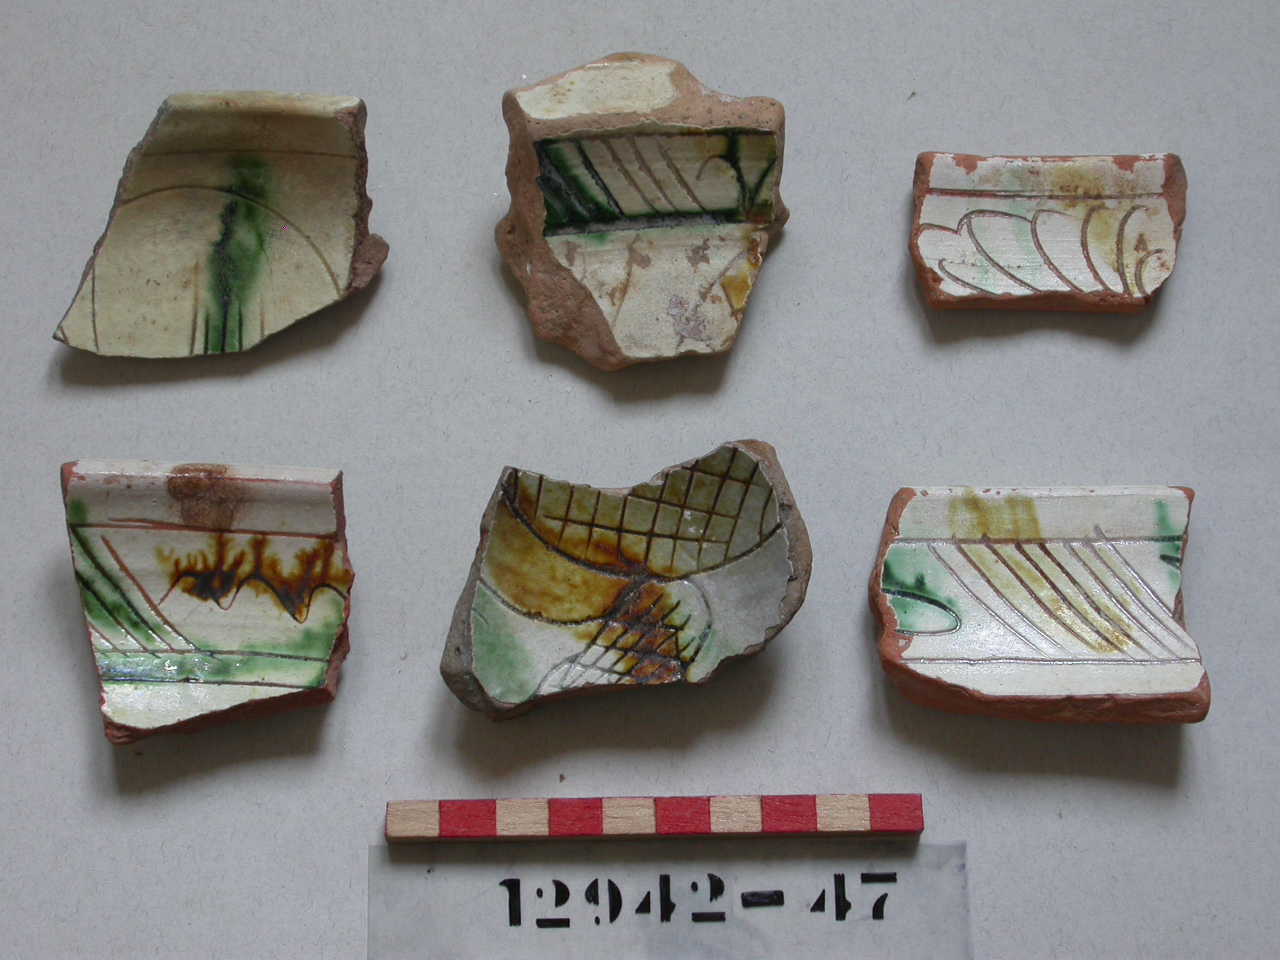 motivi decorativi vegetali (bacino, frammento) - ambito veneziano (secc. XIV/ XV)